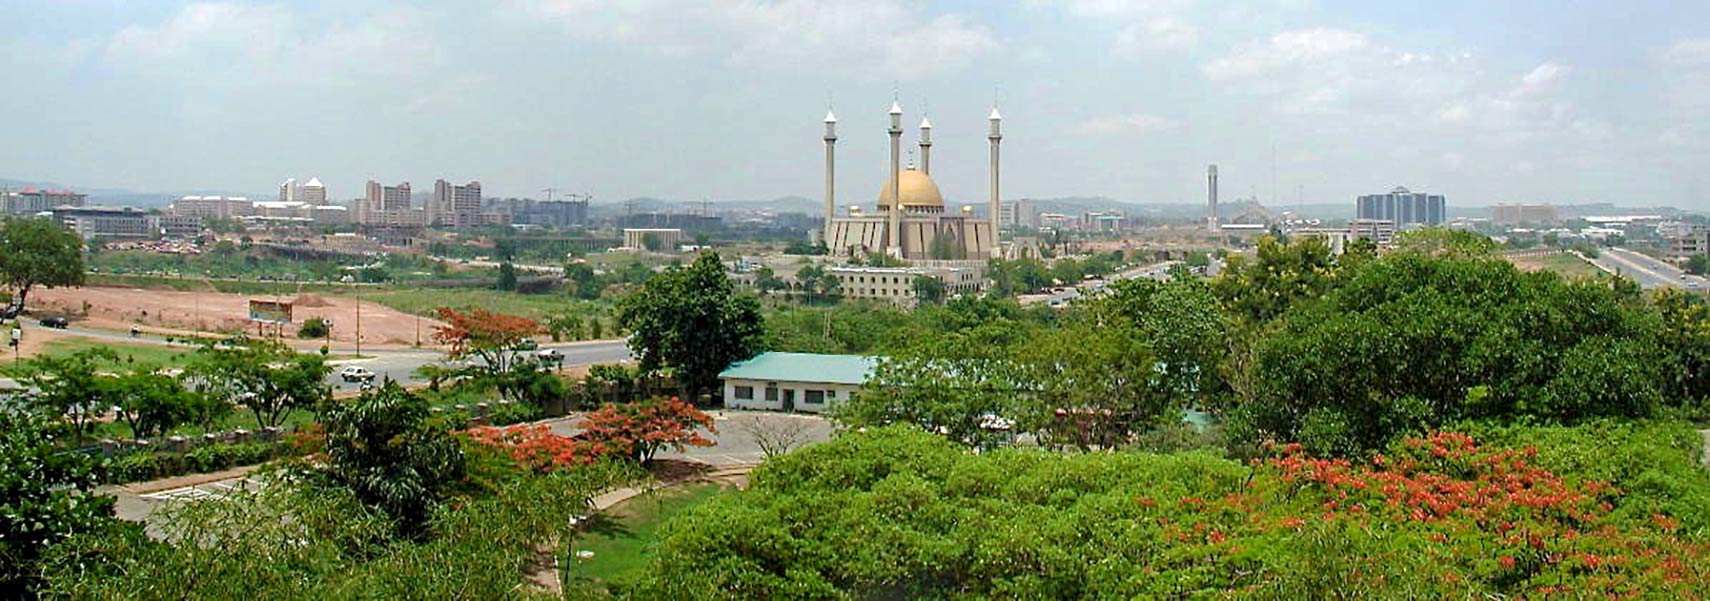 Nigerian National Mosque, city of Abuja